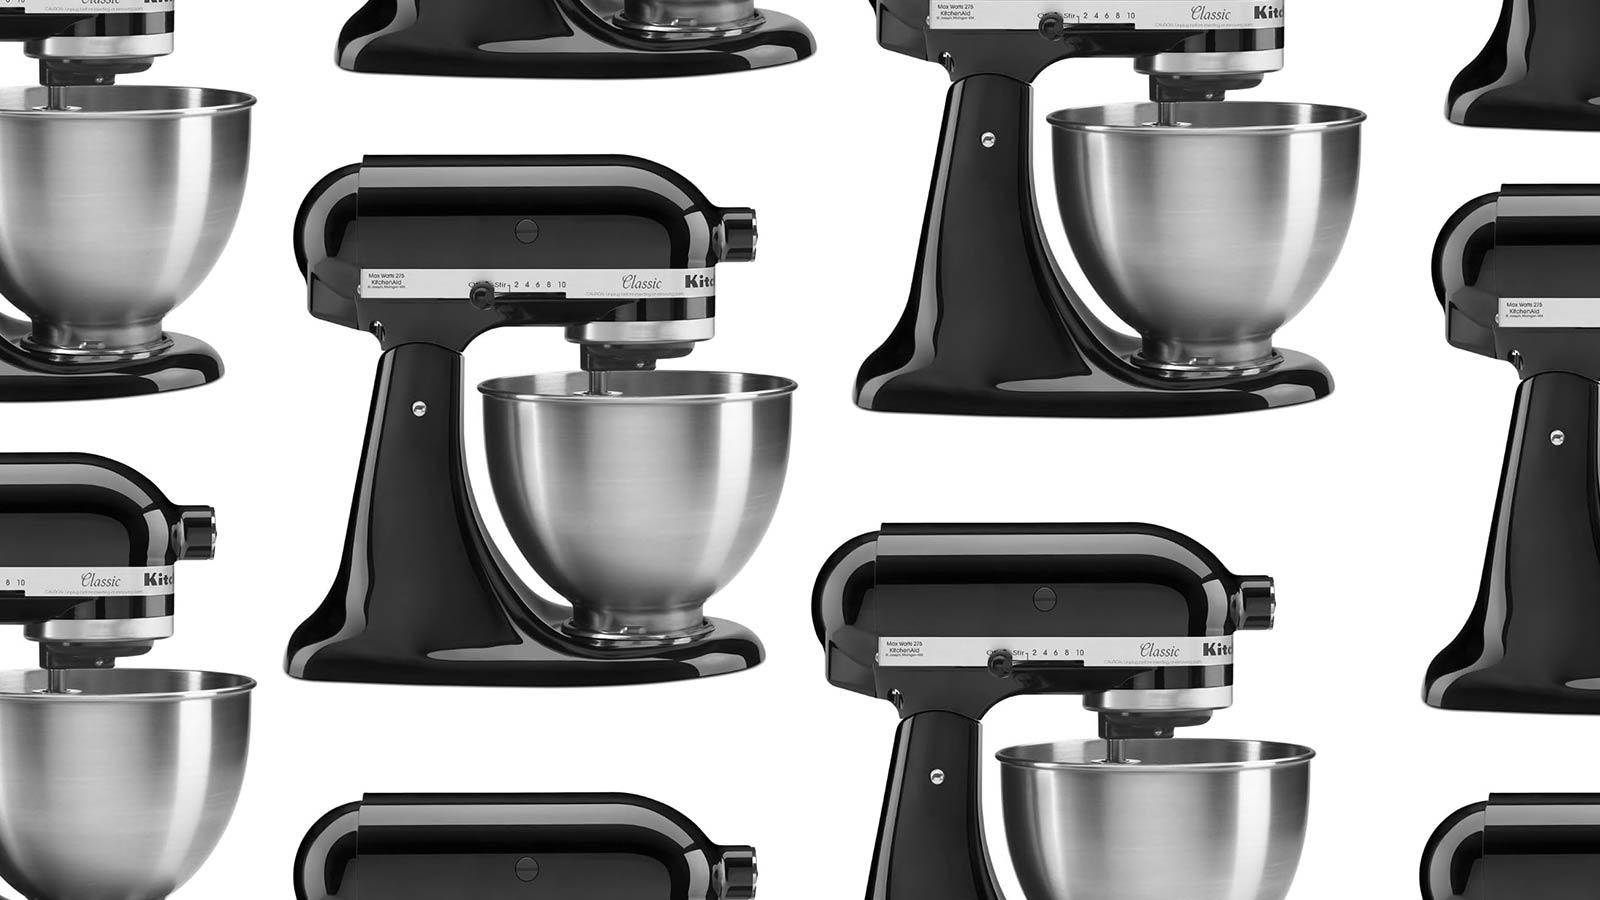 Black Friday KitchenAid deals 2023: best bargains on KitchenAid mixers and  more